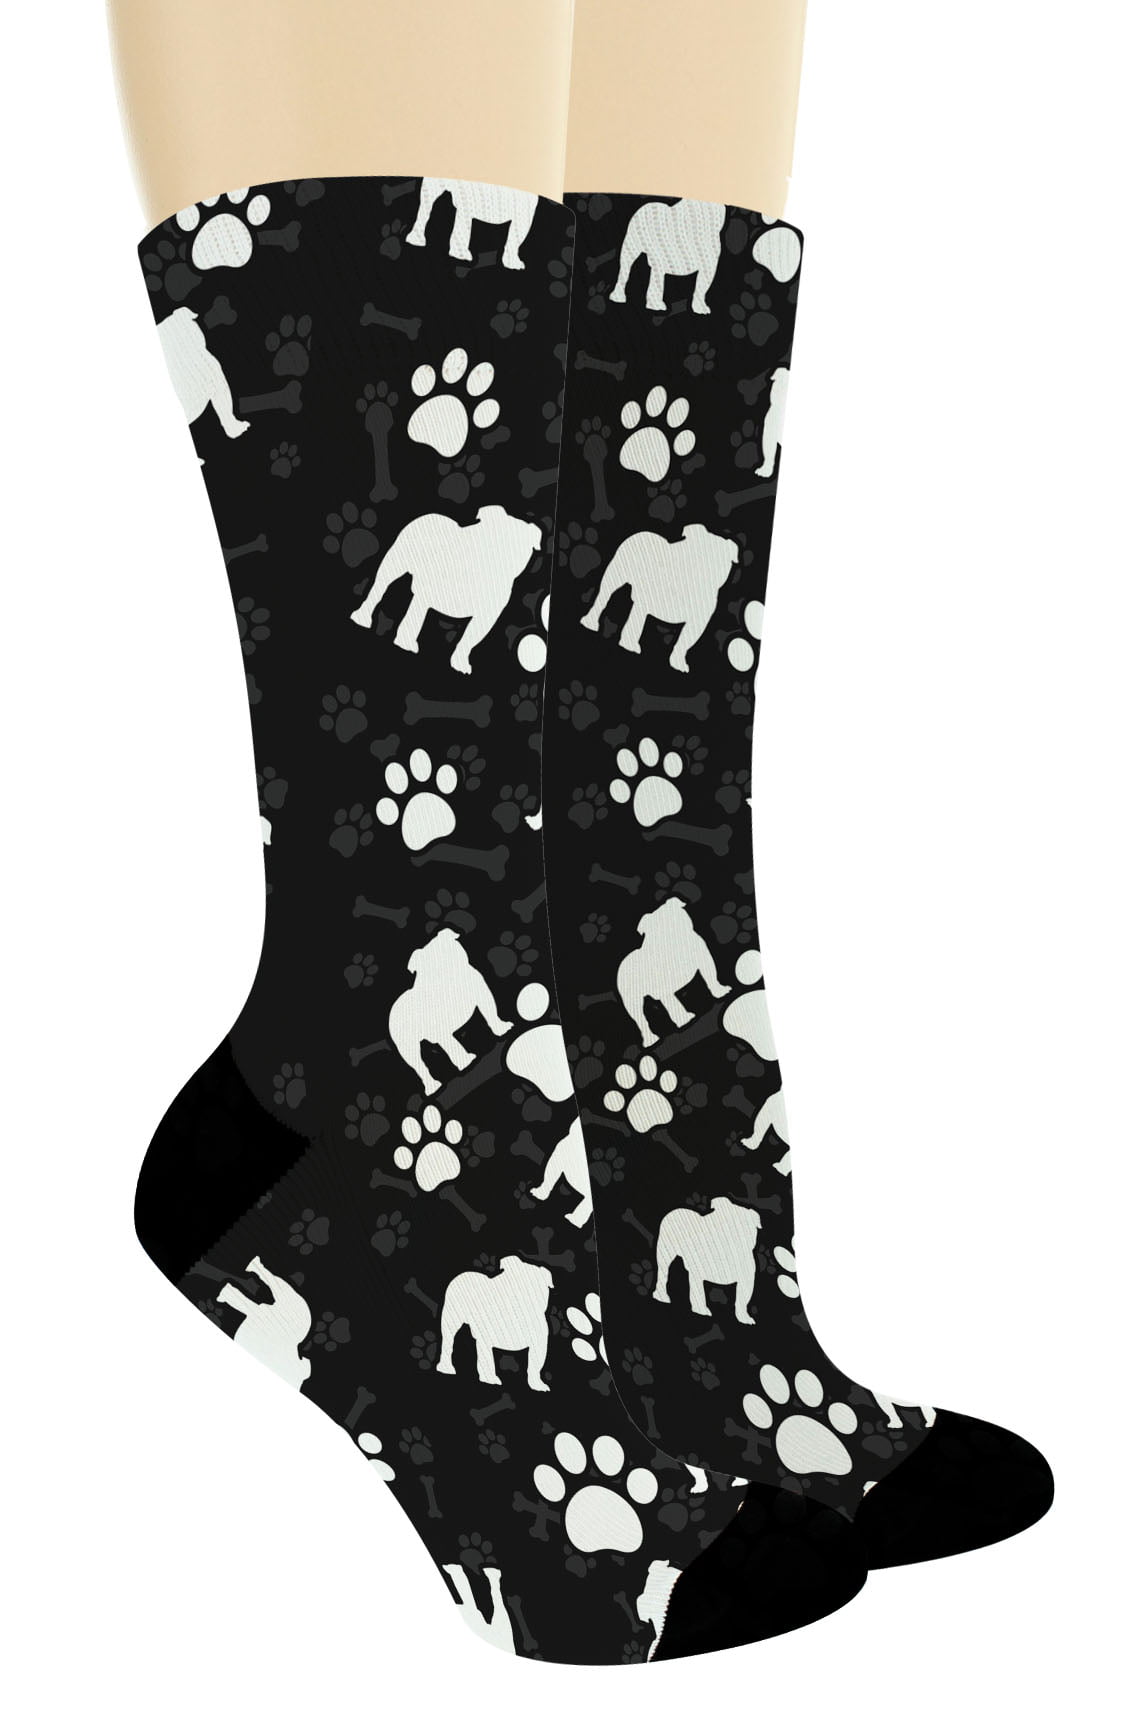 Beware of the French Bulldog on Black Socks Great Birthday Gift Novelty Socks. 